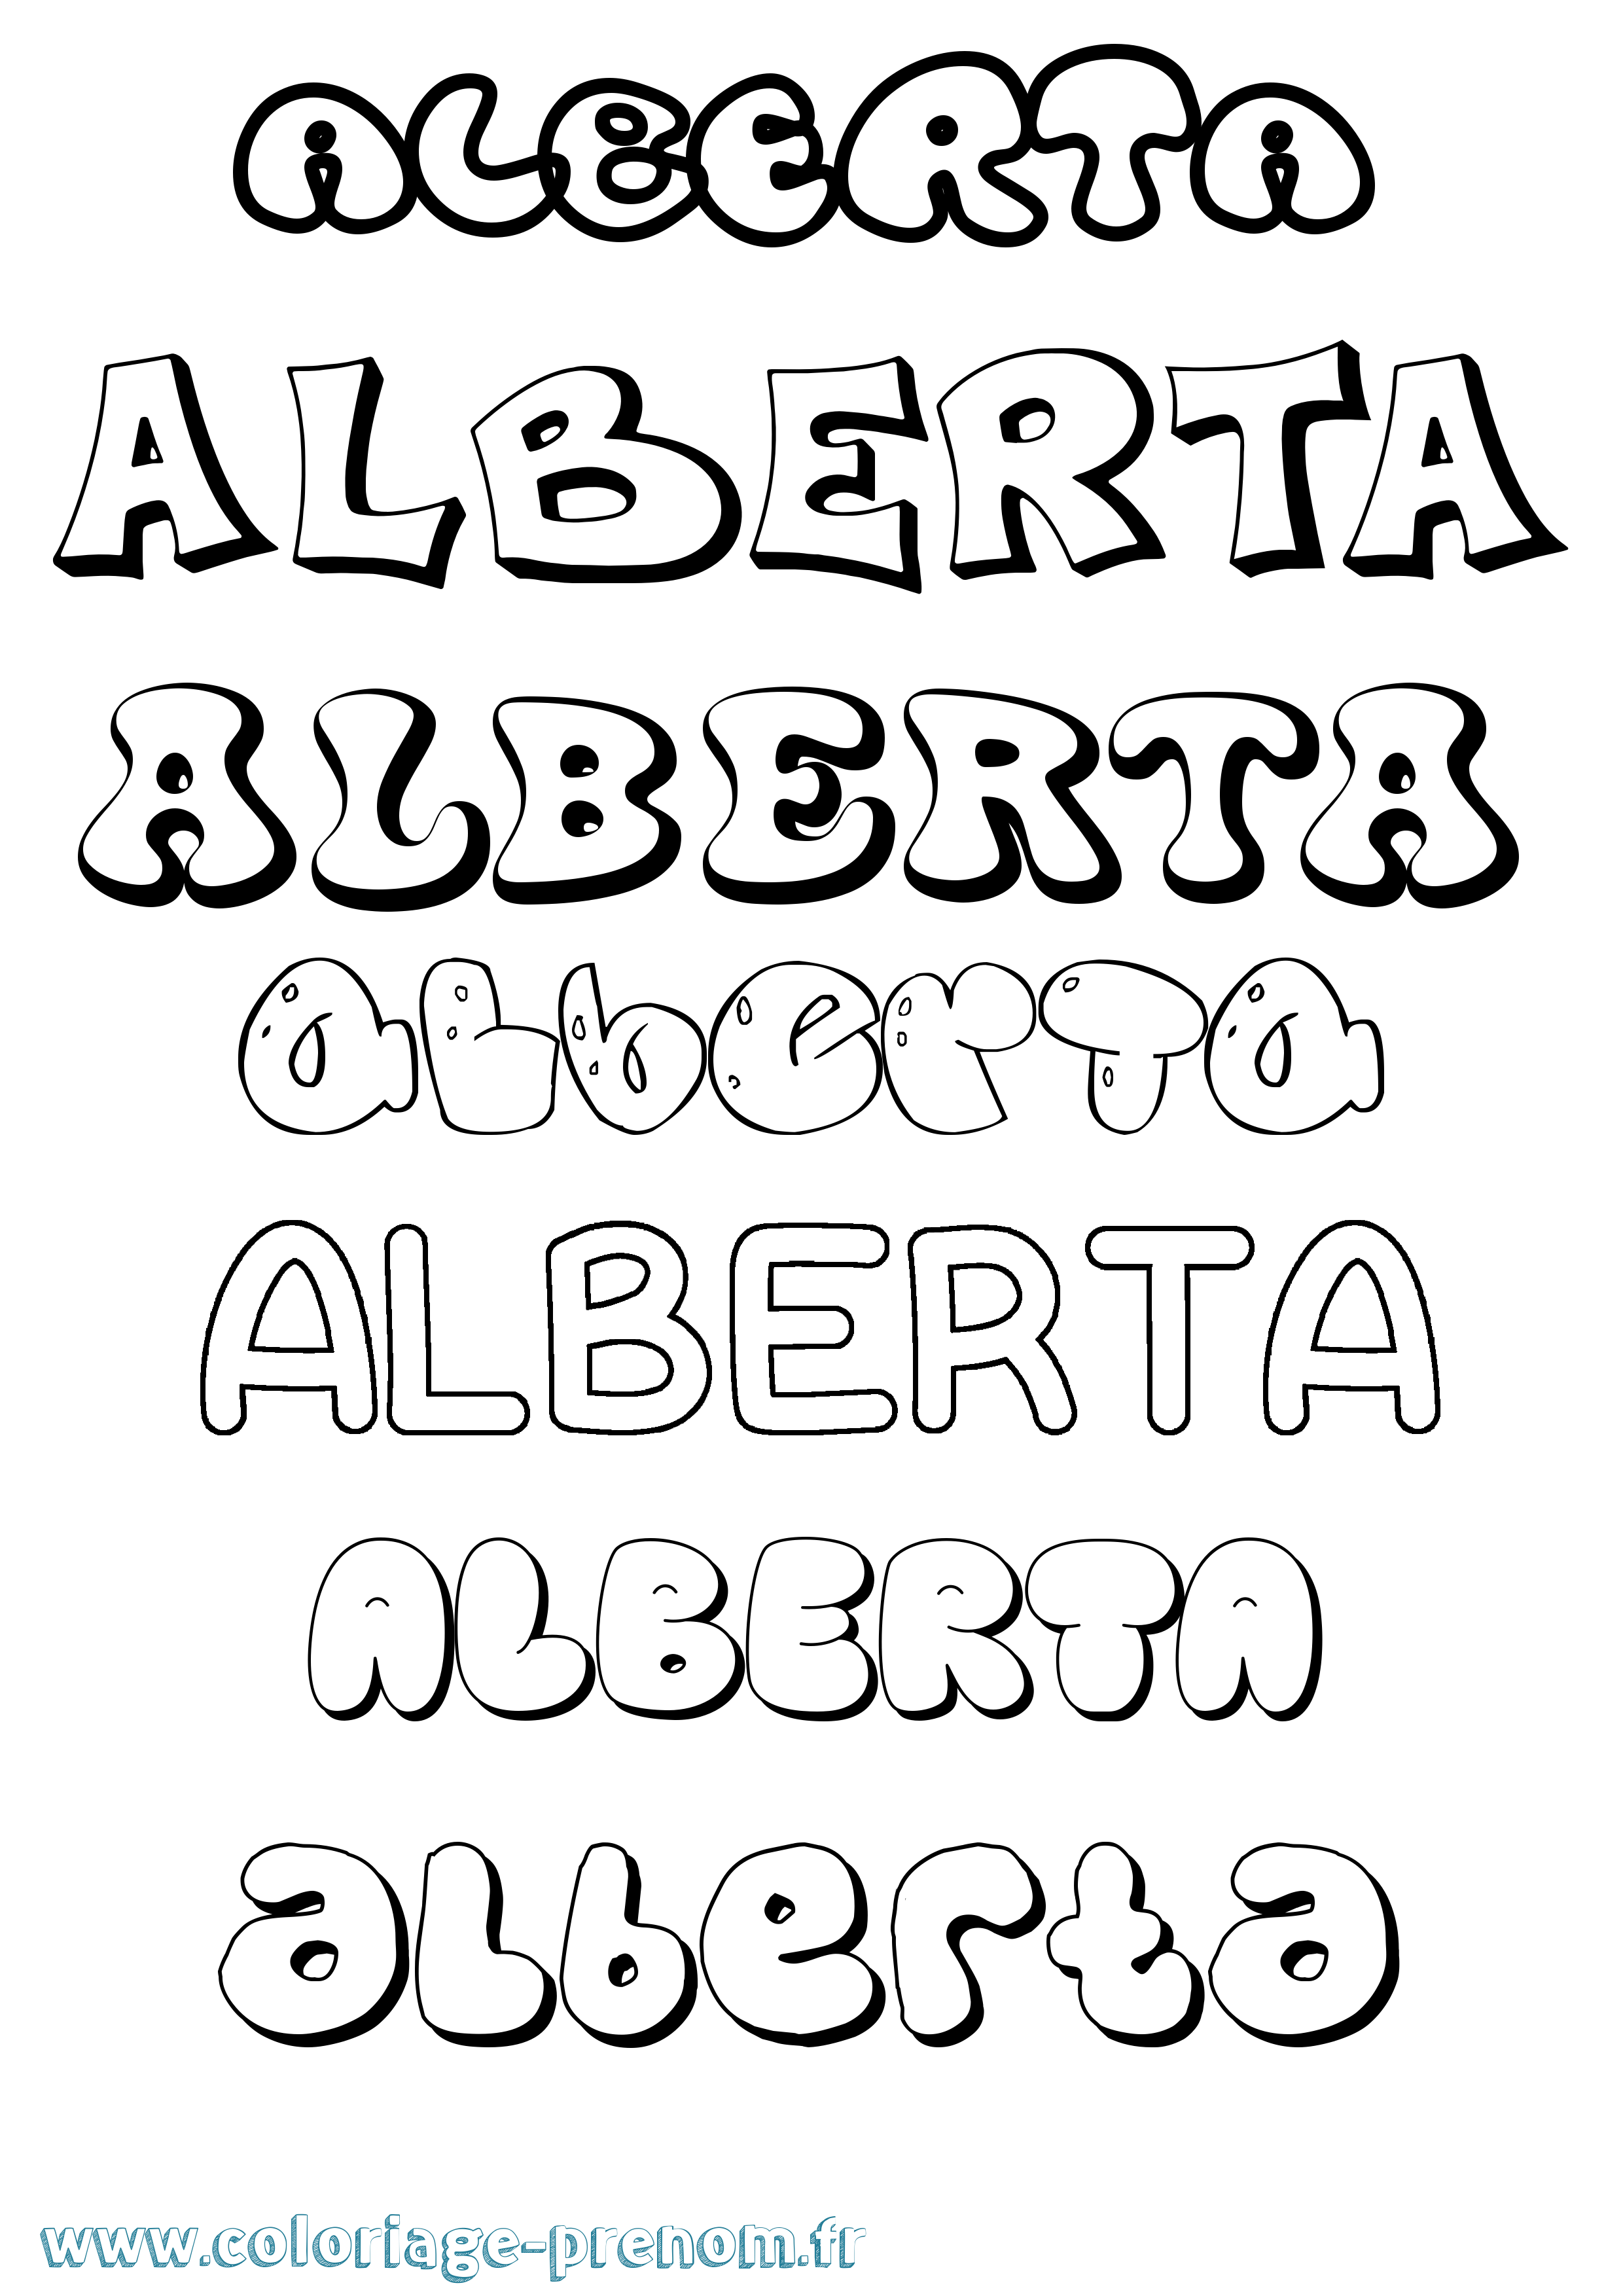 Coloriage prénom Alberta Bubble